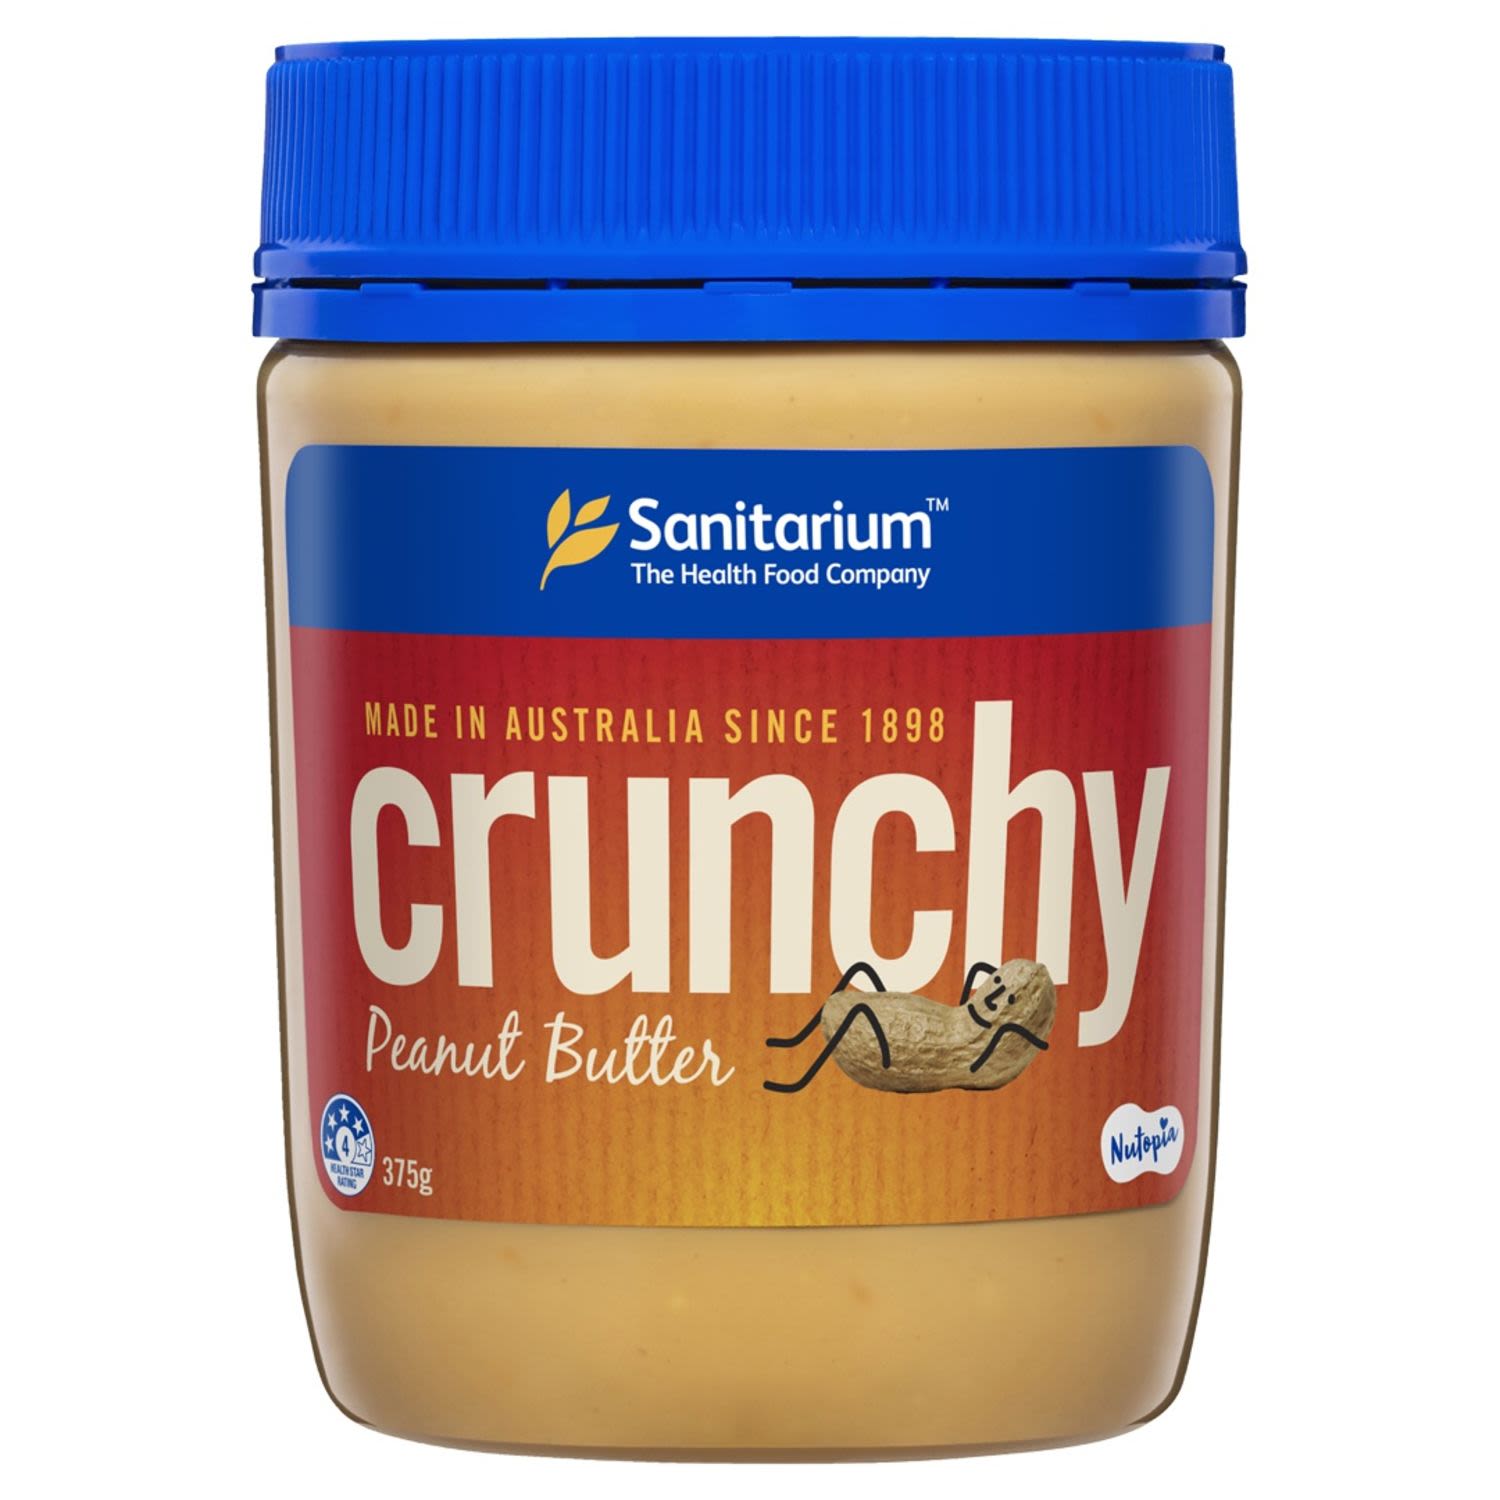 Sanitarium Crunchy Peanut Butter Spread, 375 Gram